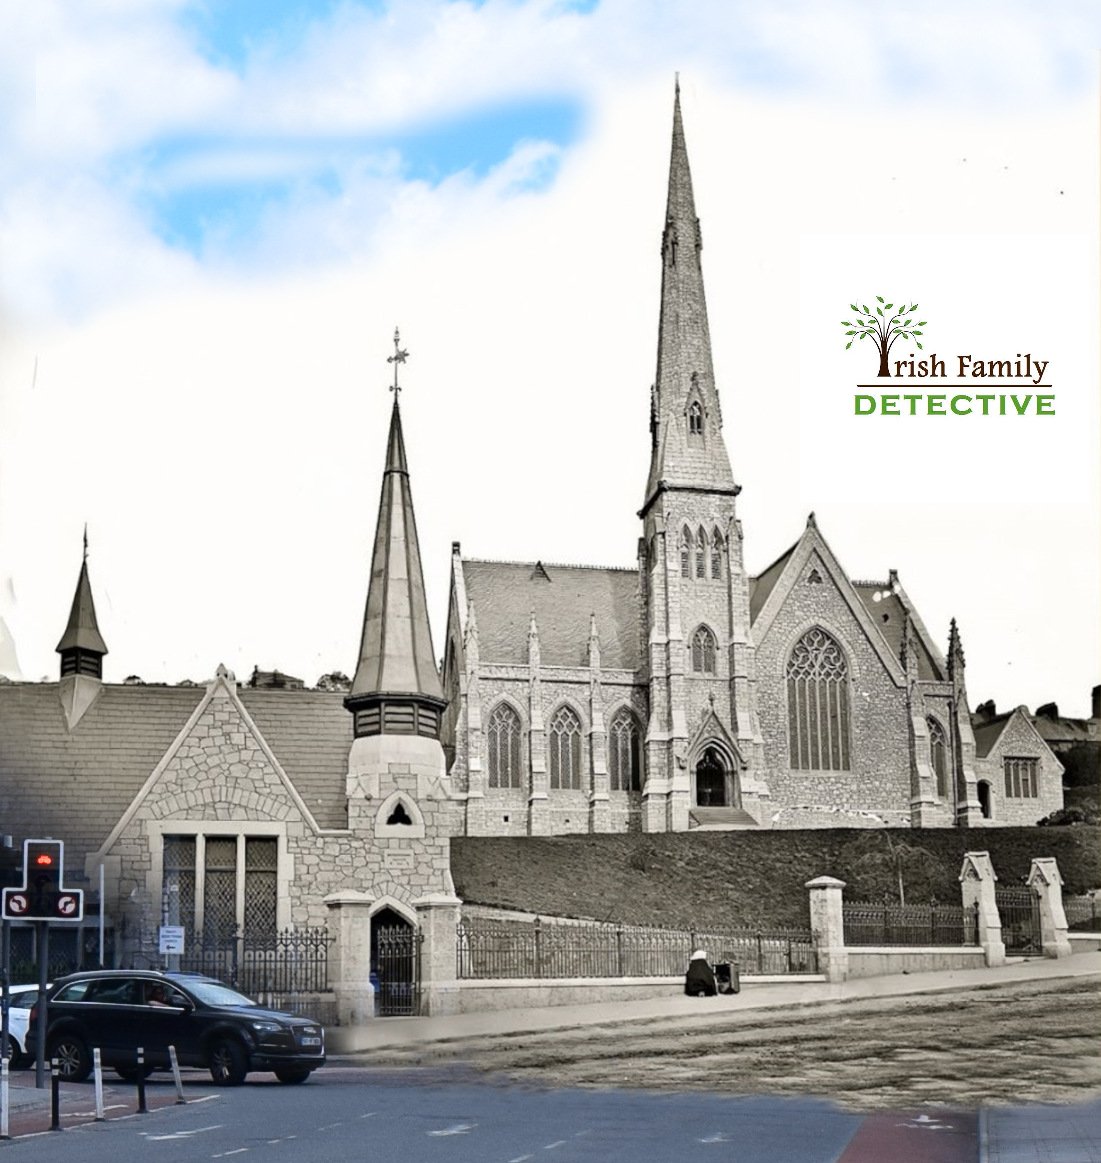 Timewarp of Trinity Presbyterian Church, Summerhill North, #Cork then c1870 & now #Lovecork #PureCork #CorkLike #TimewarpCork B&W📸Joe Healy
irishfamilydetective.ie/timewarp